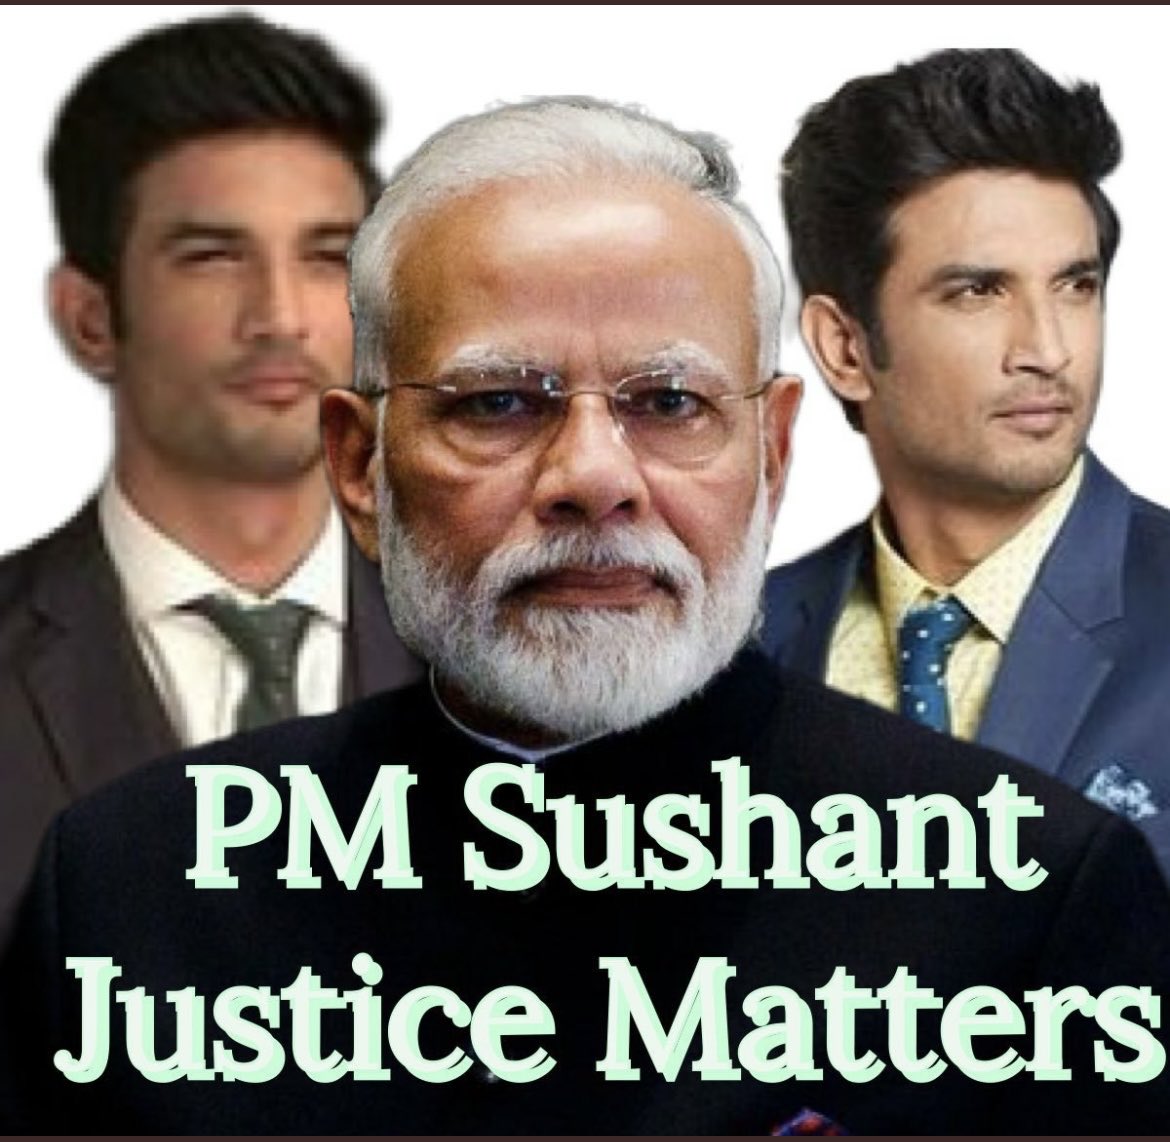 @iStand4SSR @PMOIndia @TrueColoursOnly @07Godspower @aayushlr @AshutoshSureka6 @Deenuboy @KachruRachna @itsShweta211031 @BappaManab1 @cbic_india ❤️ @itsSSR ❤️ Worldwide Justice For Sushant Singh Rajput 💫 PM Sushant Justice Matters 💫 #JusticeForSushant️SinghRajput